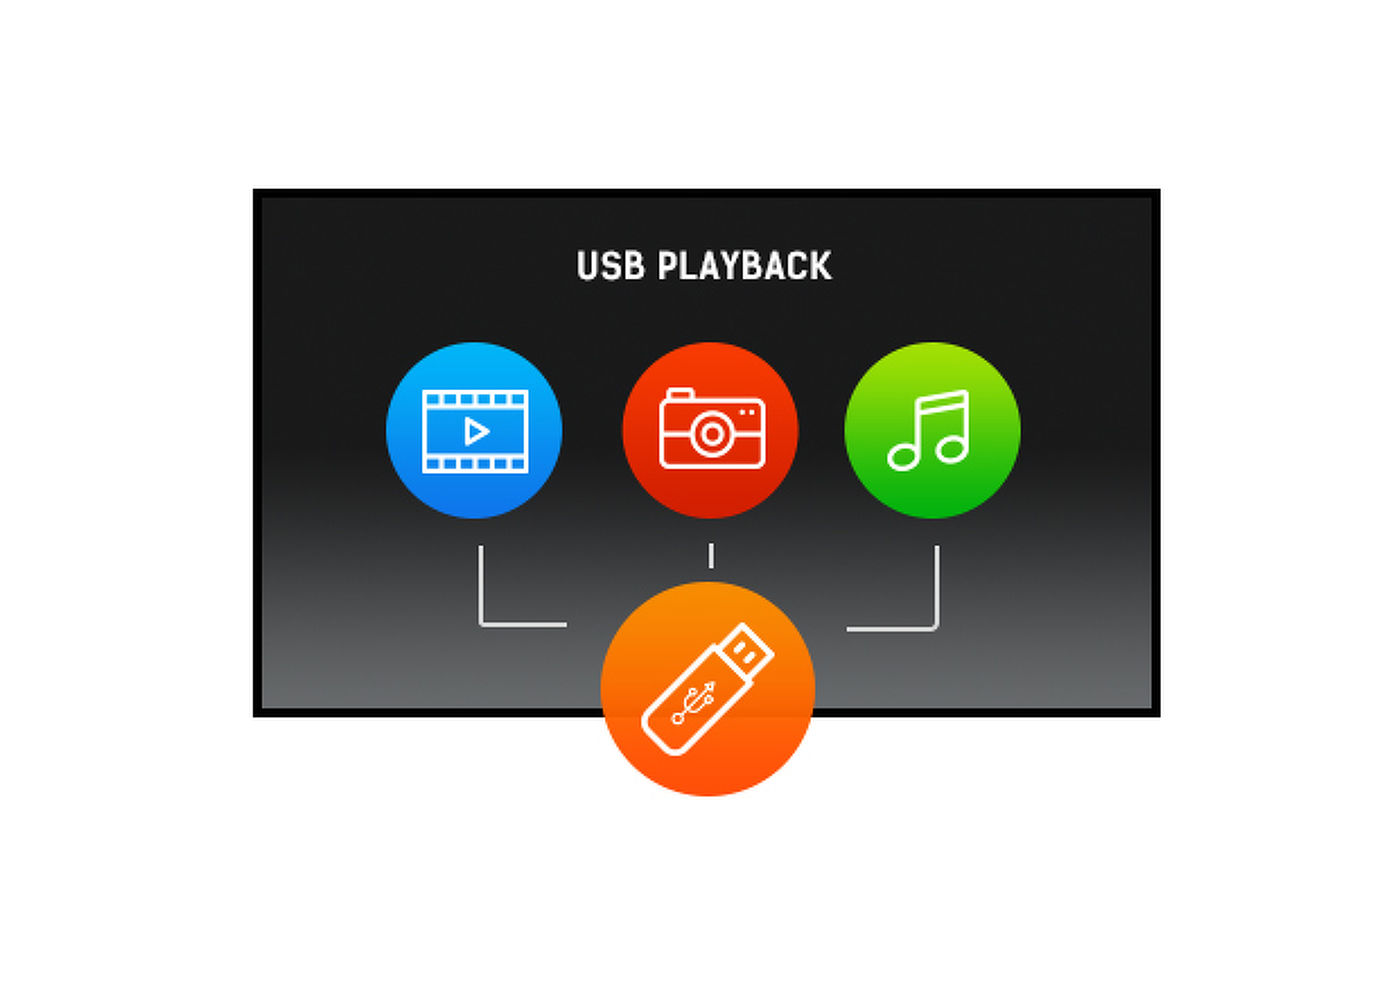 Playback USB 